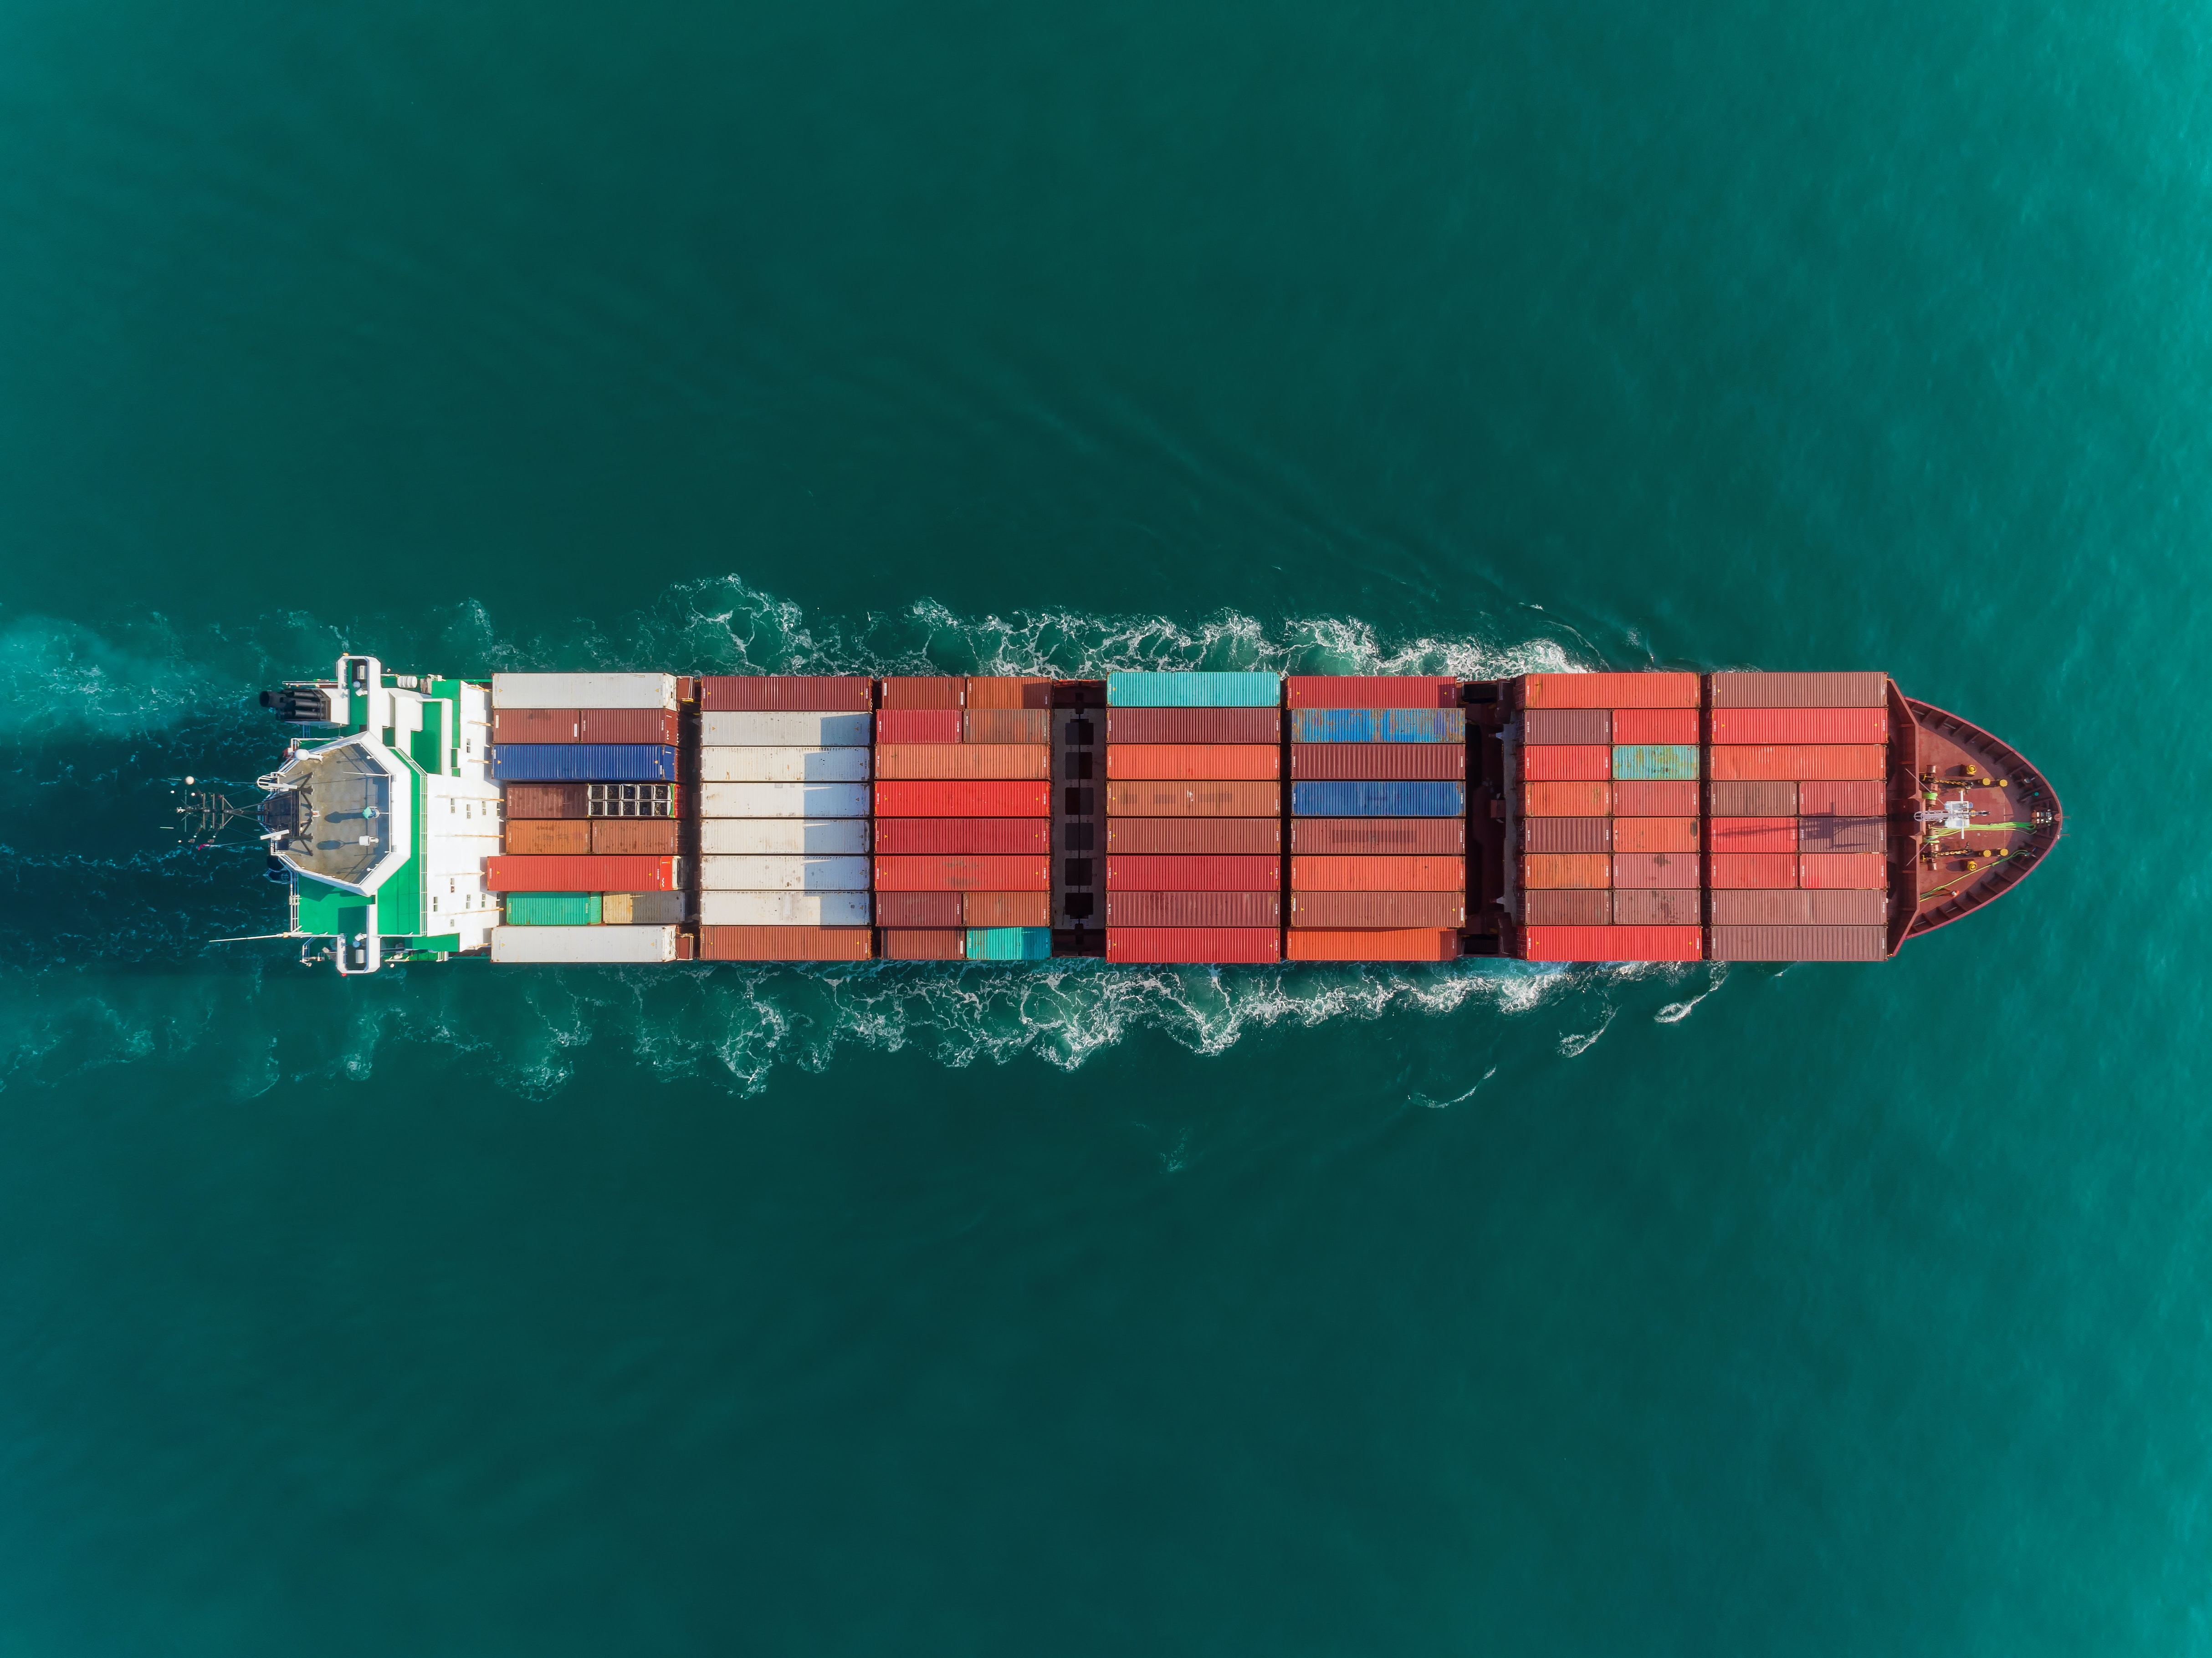 A birds-eye view of a container ship moving across the ocean